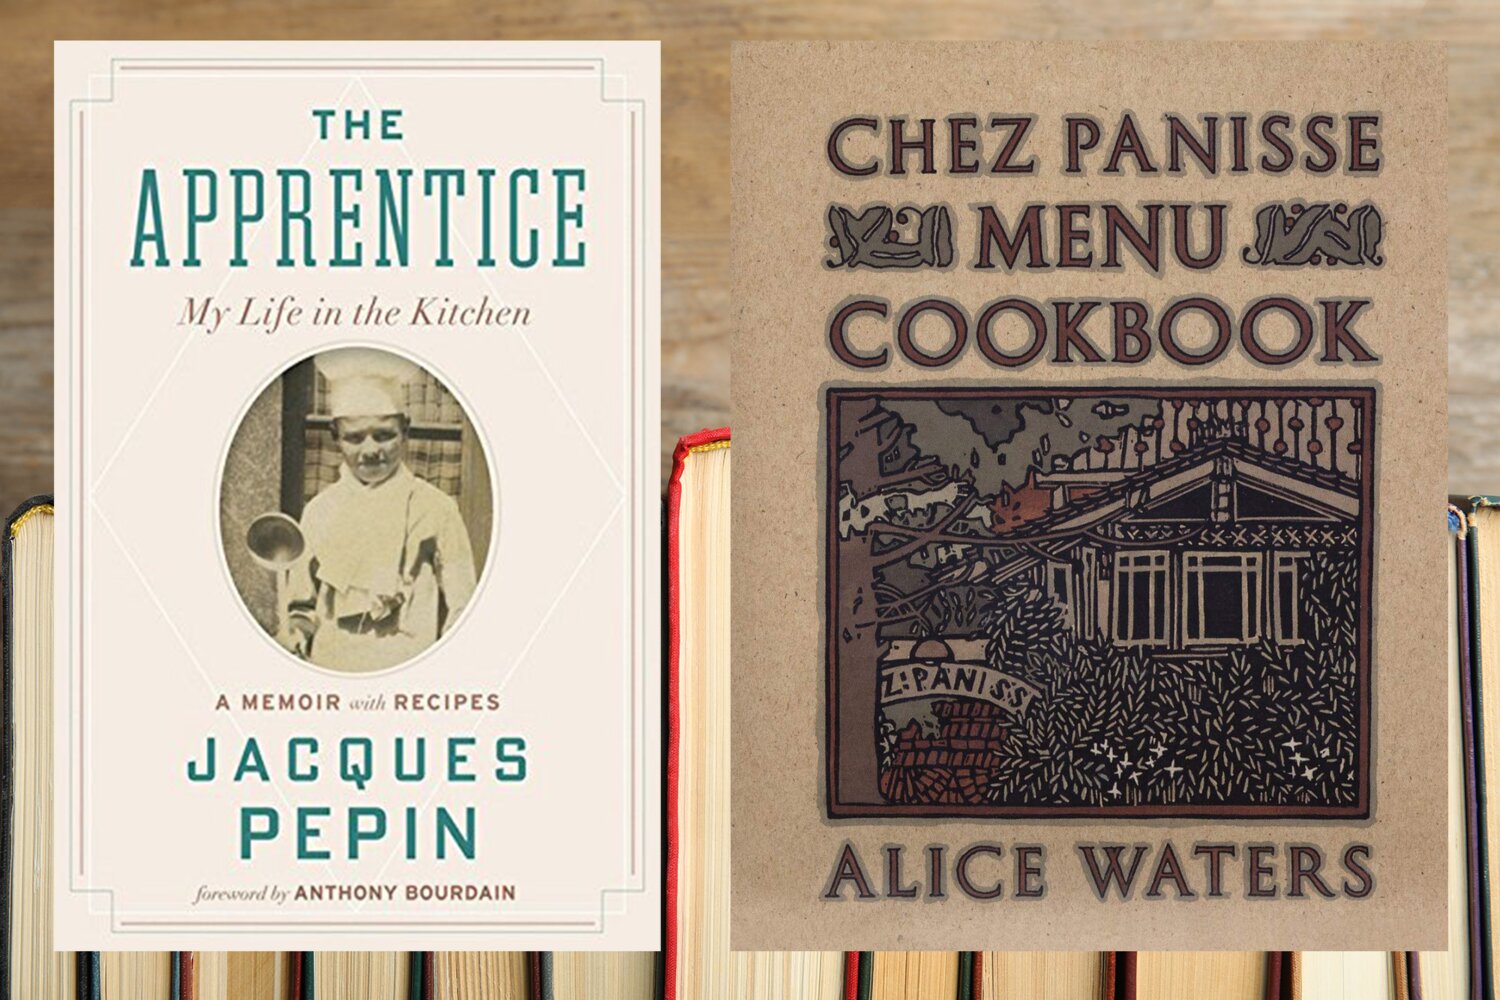 The Apprentice and Chez Panisse